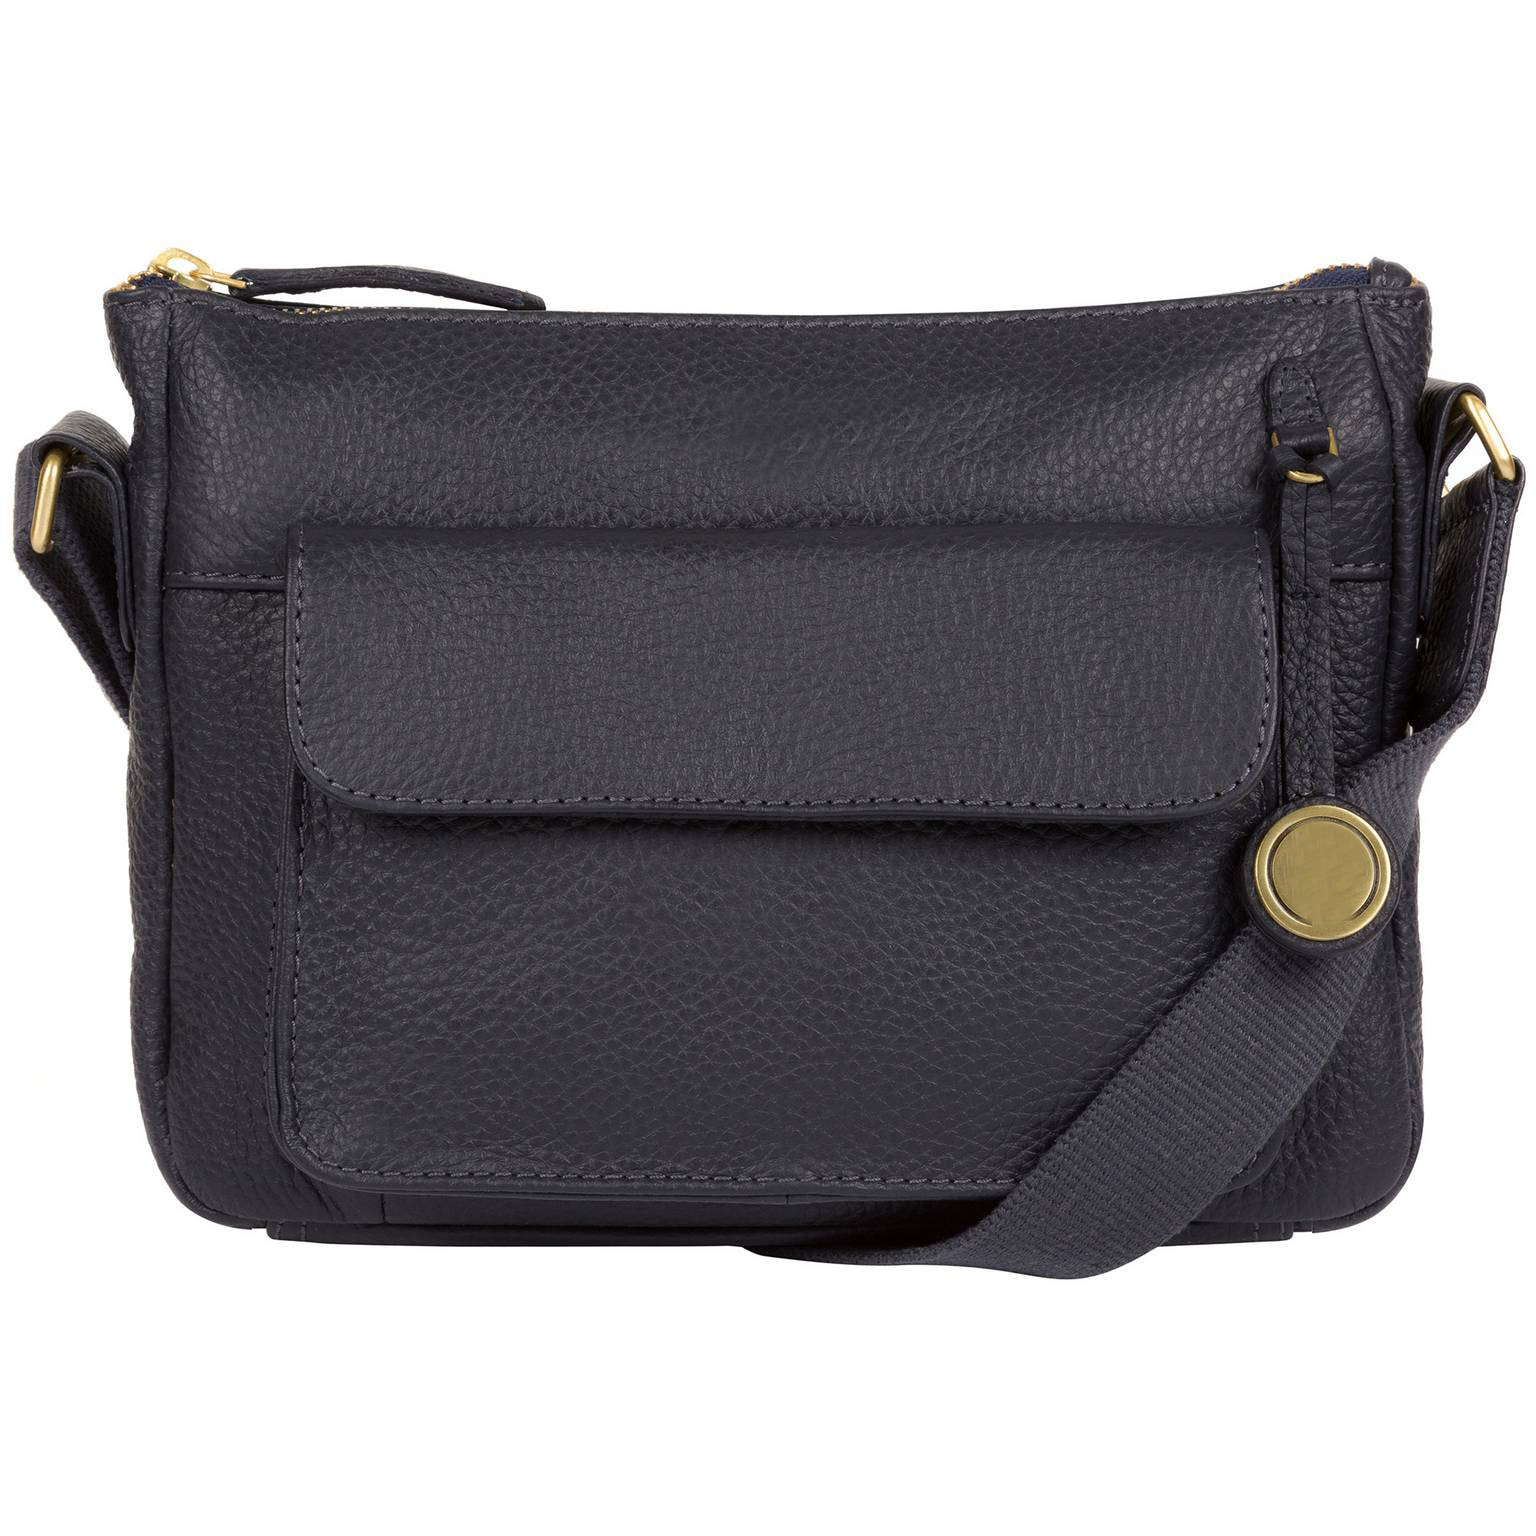 Small Dark Navy Leather Shoulder Bag, Cross Body Bag